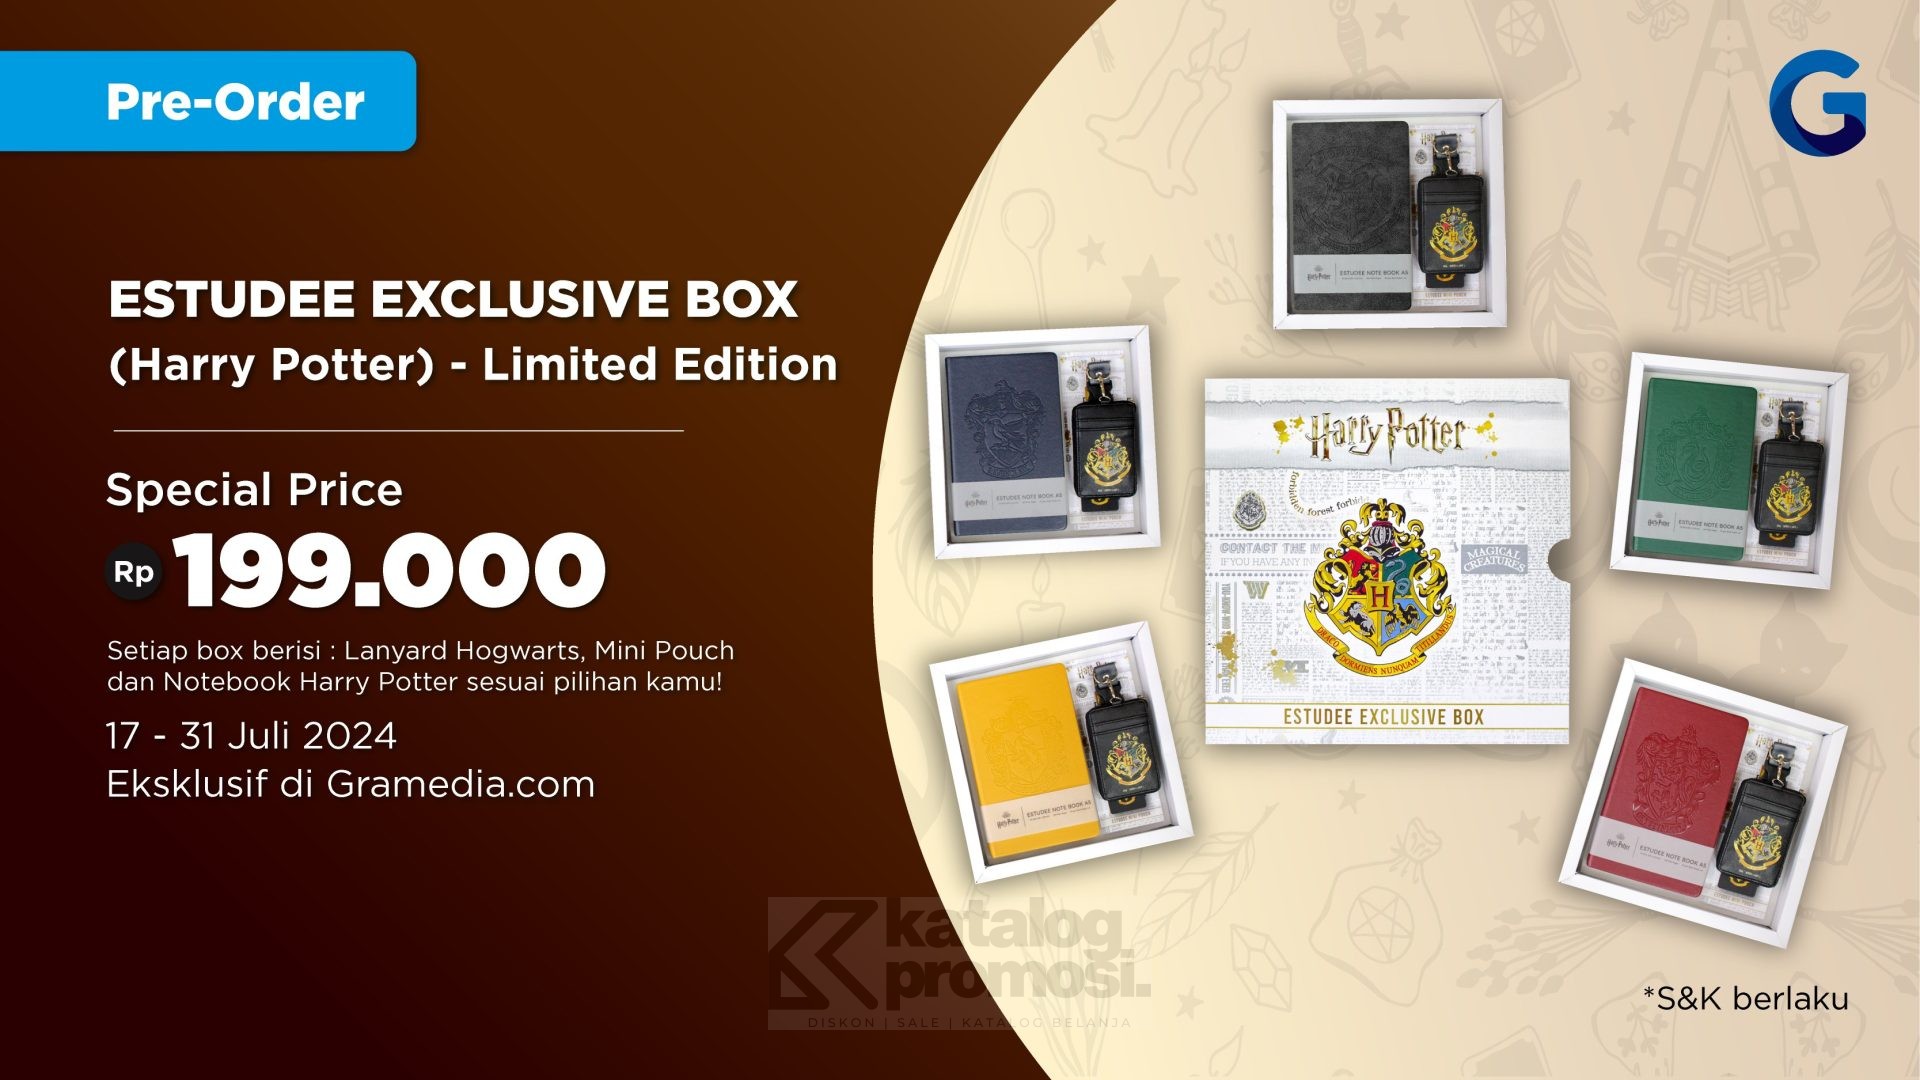 Estudee-exclusive-box-Harry-Potter-harga-spesial-gramedia.jpg